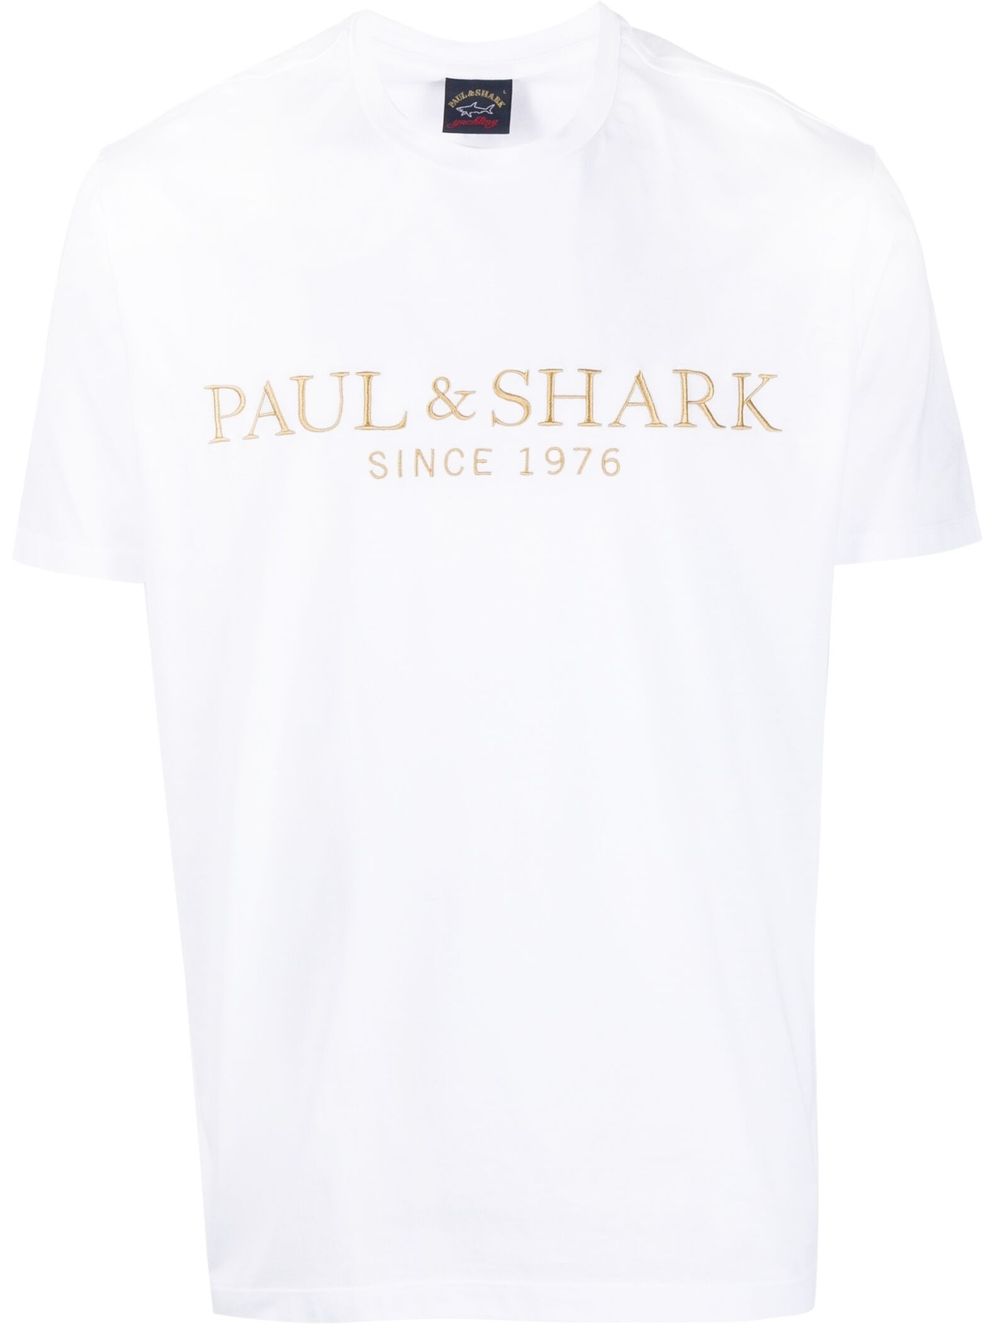 PAUL & SHARK LOGO T-SHIRT